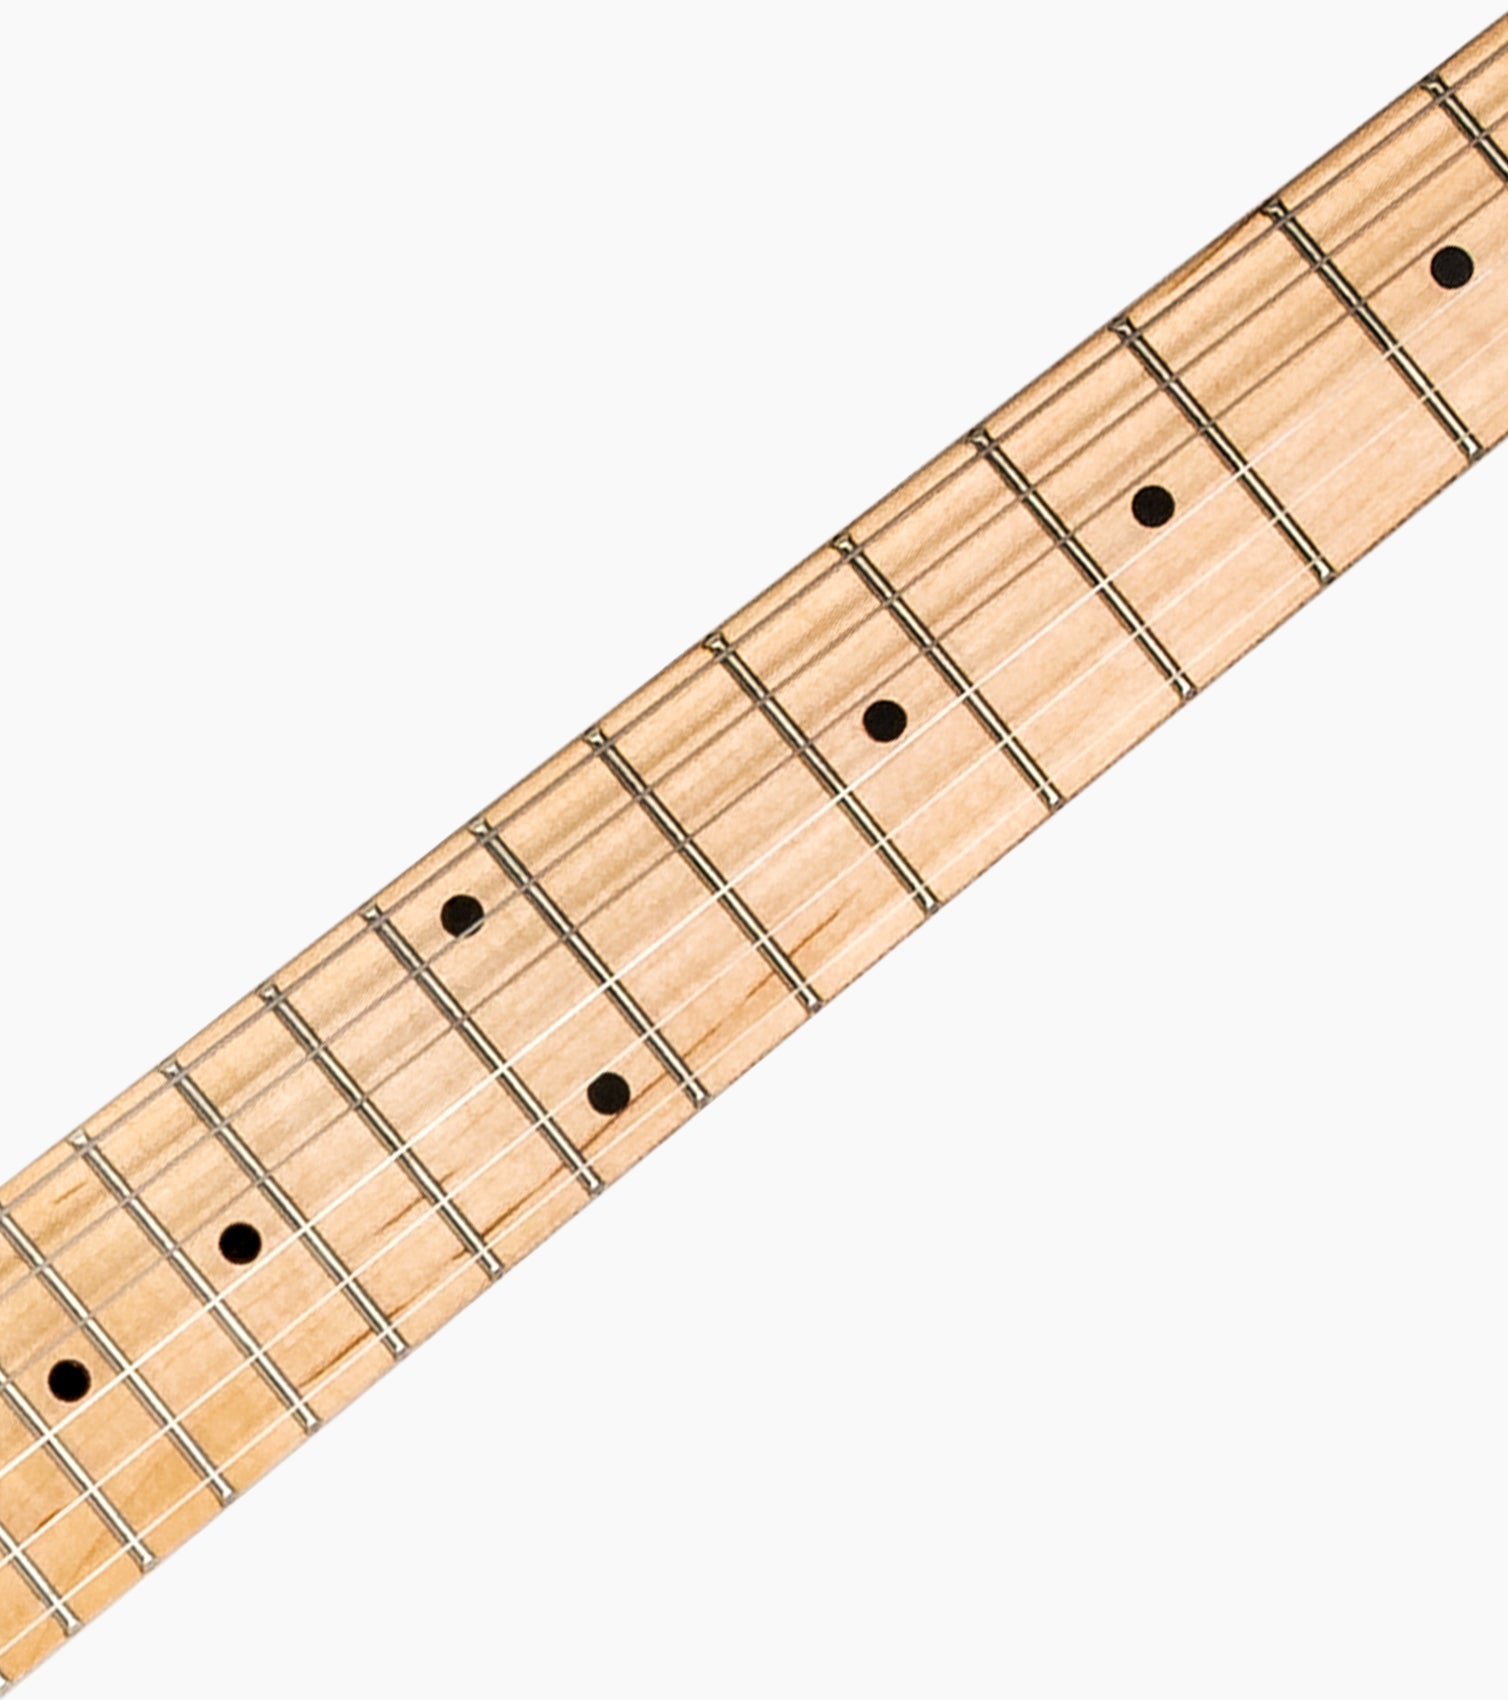 close-up of Cream White single-cutaway electric guitar fretboard